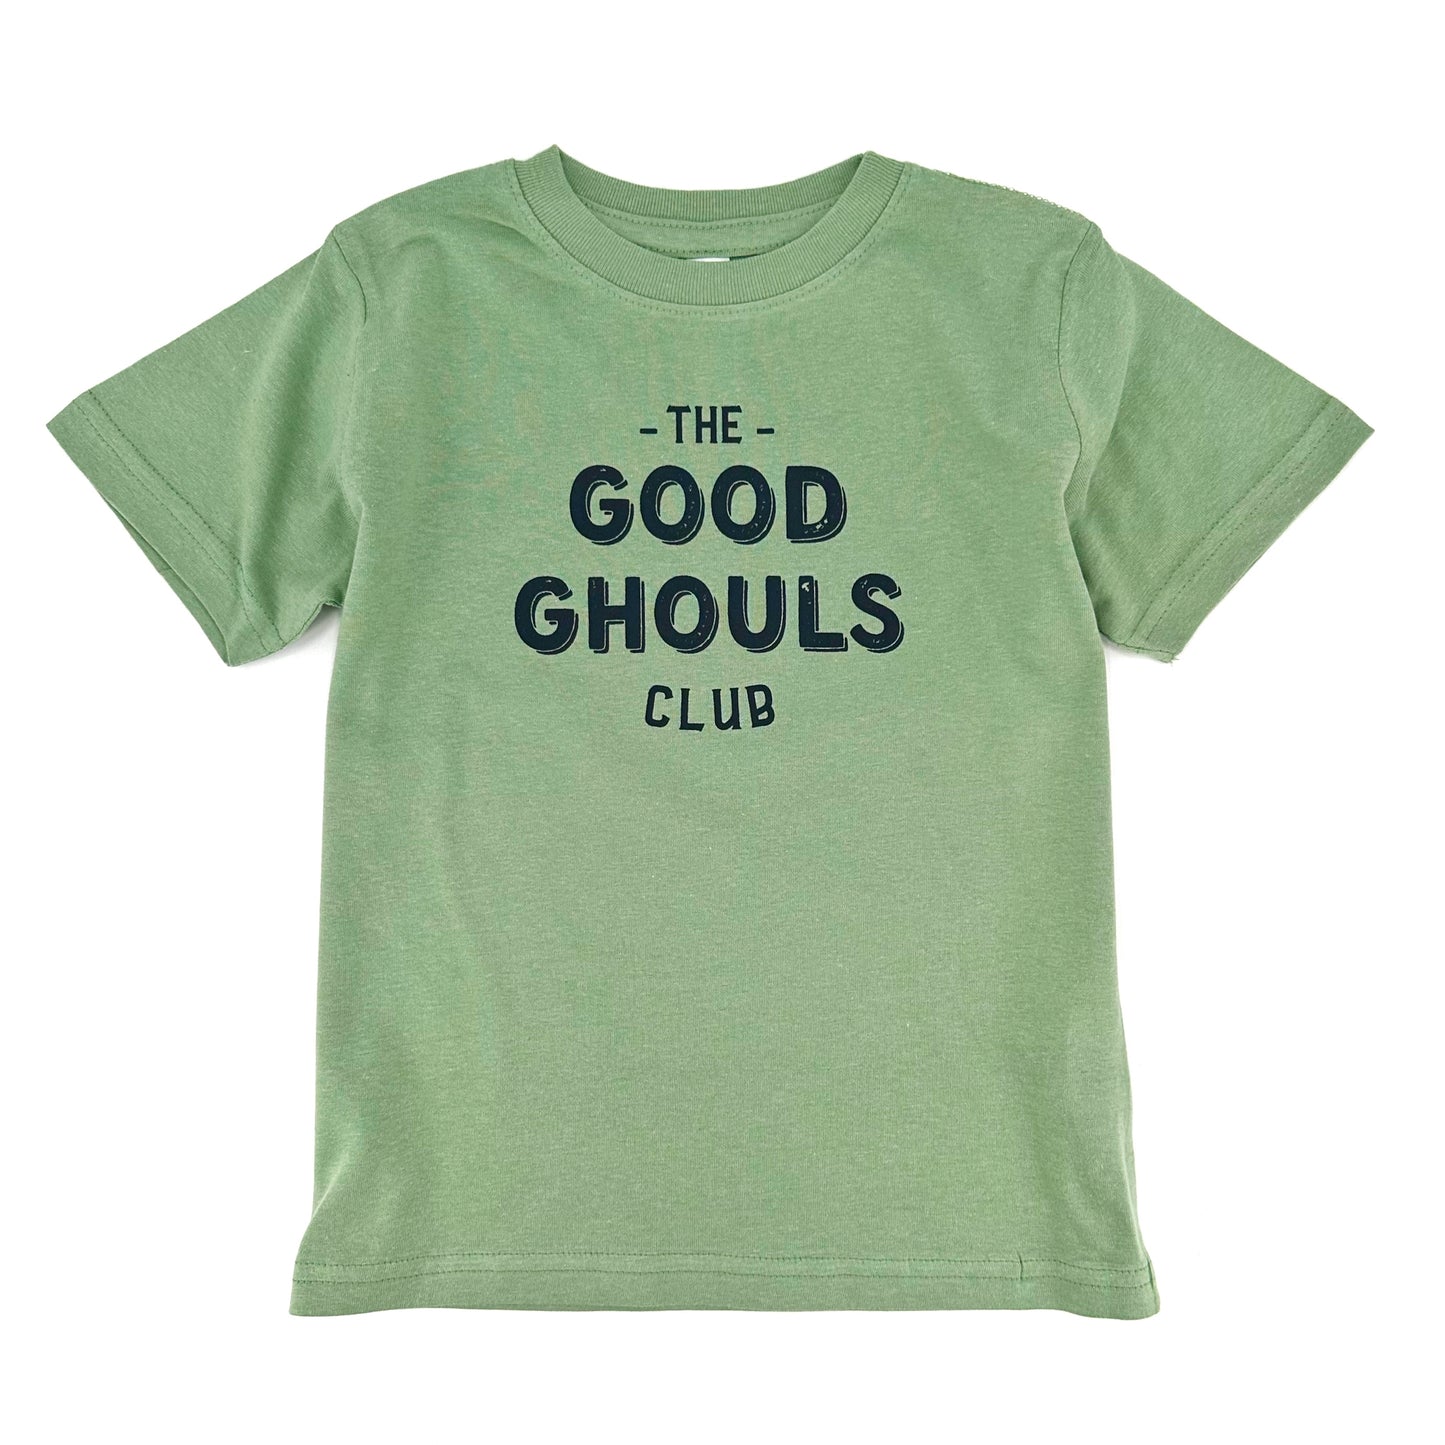 The Good Ghouls Tee, green shirt